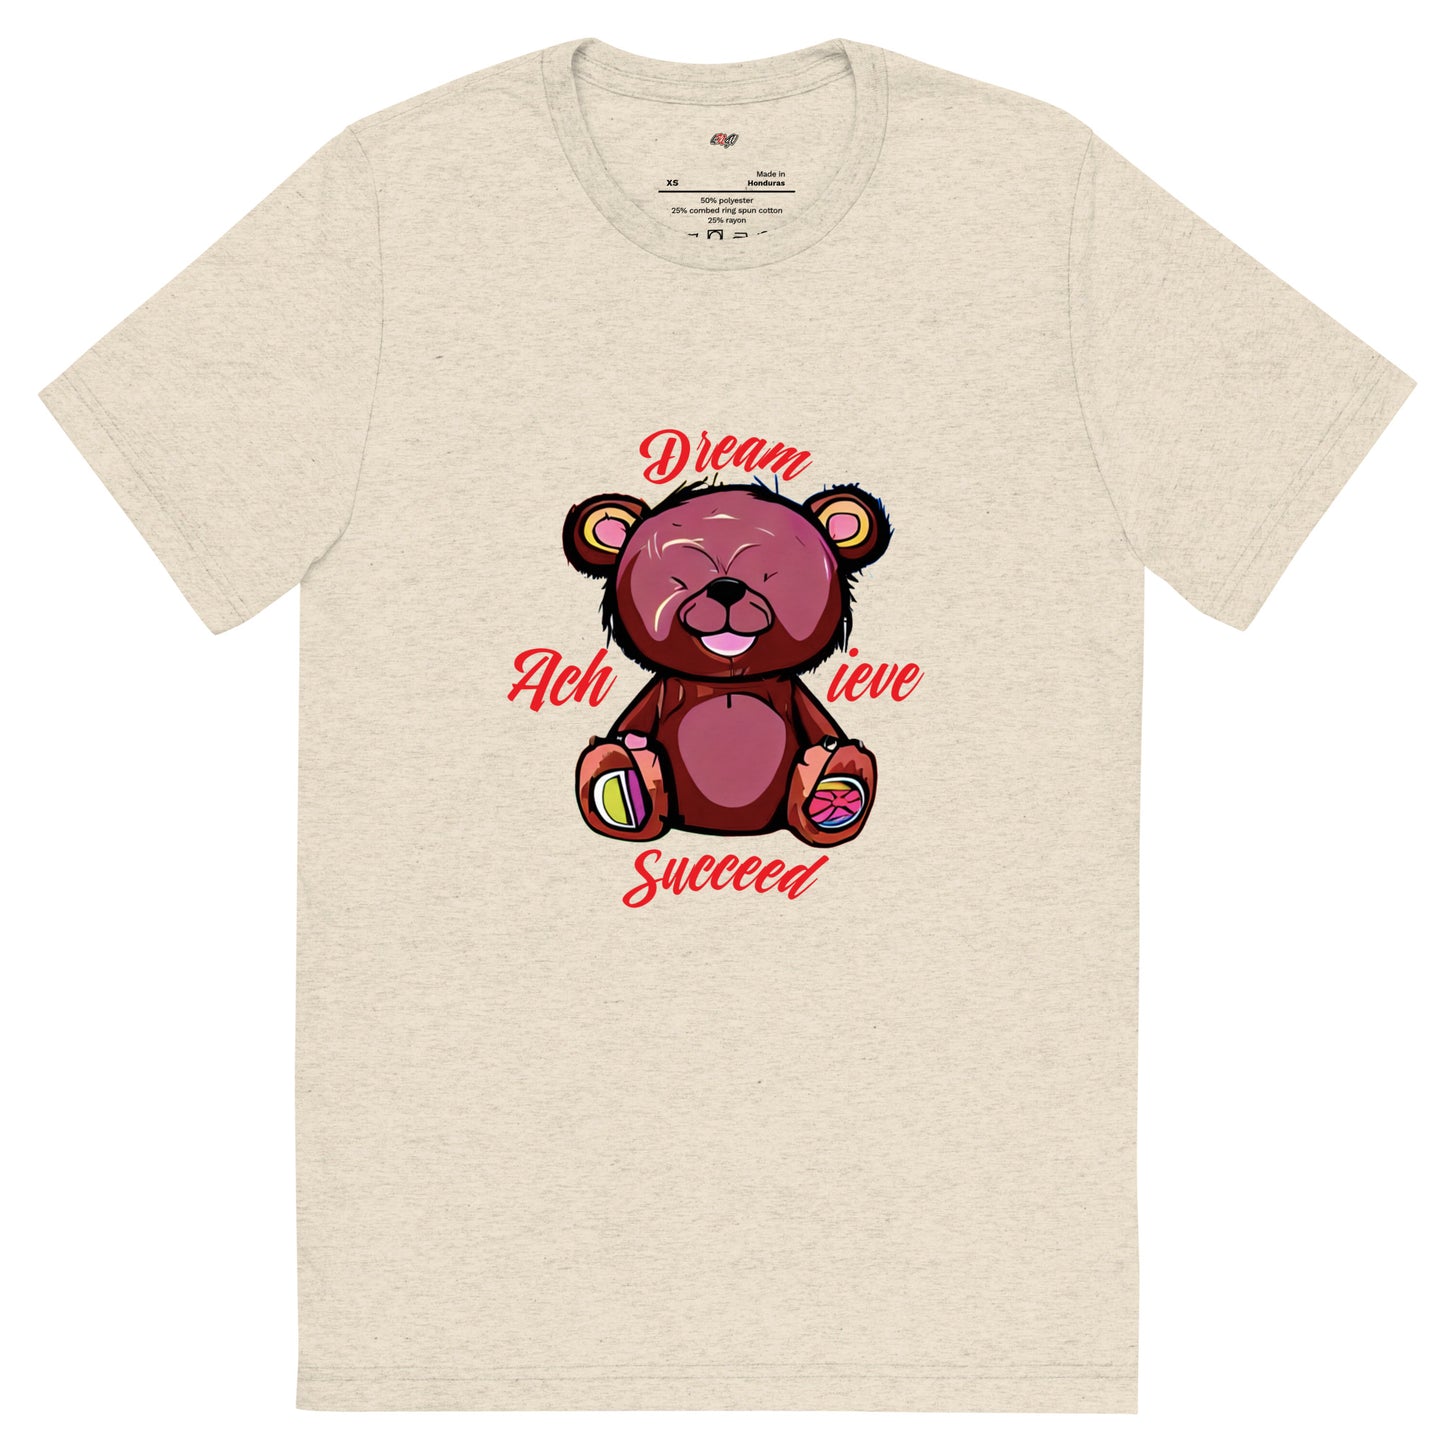 Dream, Achieve, & Succeed Bear | Knqv 50% Polyester | Short sleeve t-shirt